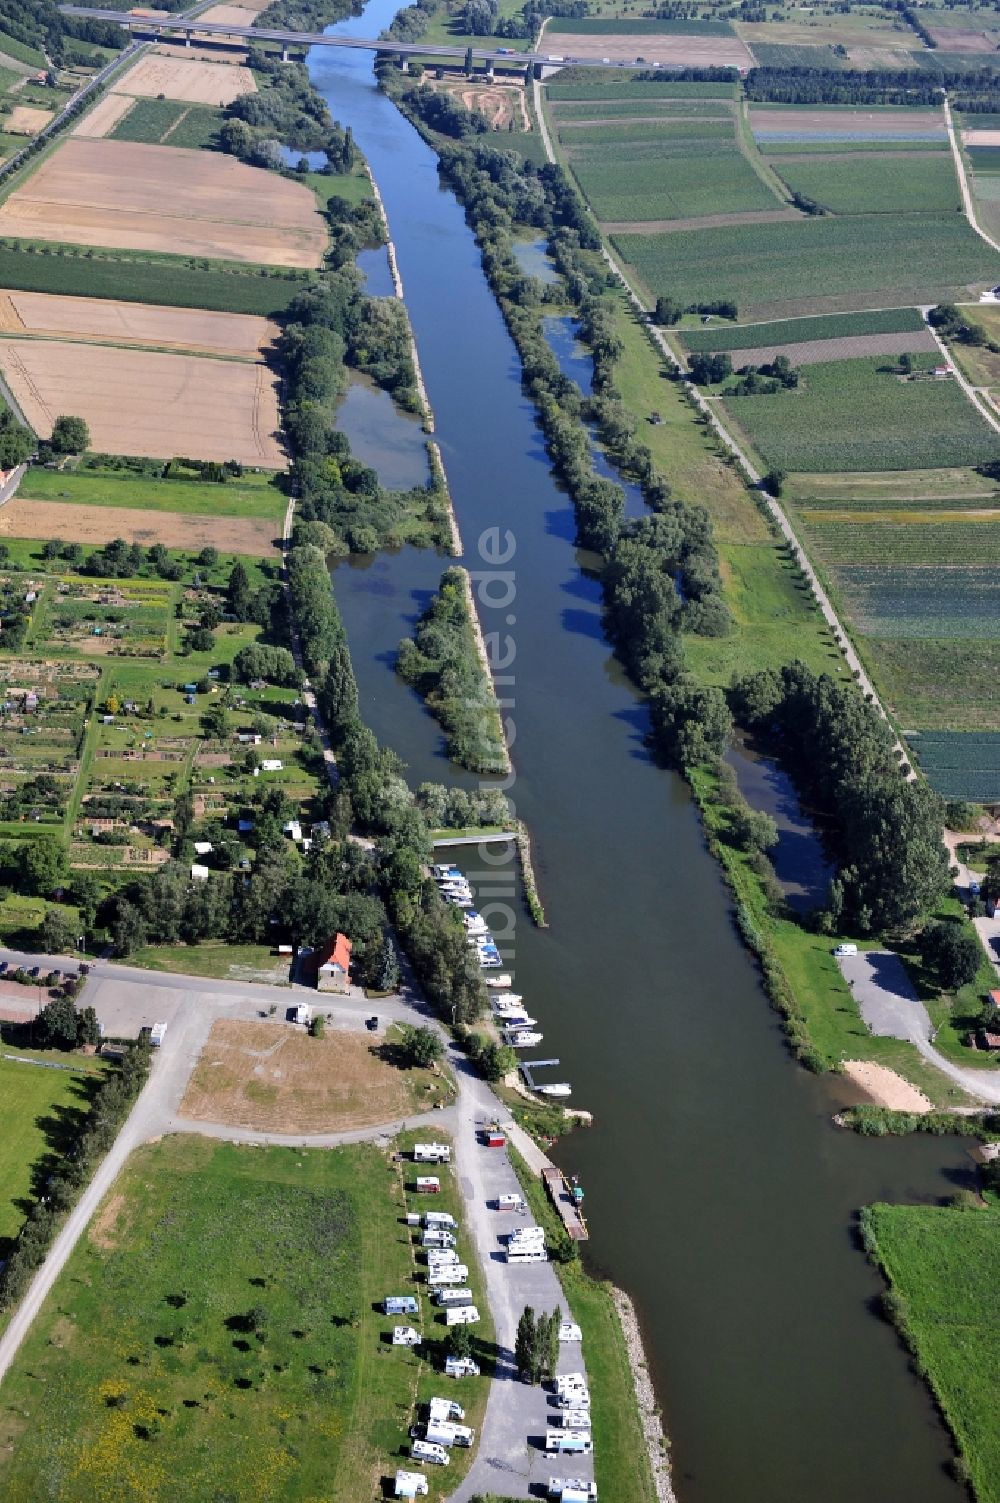 Luftaufnahme Mainstockheim - Flussverlauf des Main bei Mainstockheim im Bundesland Bayern